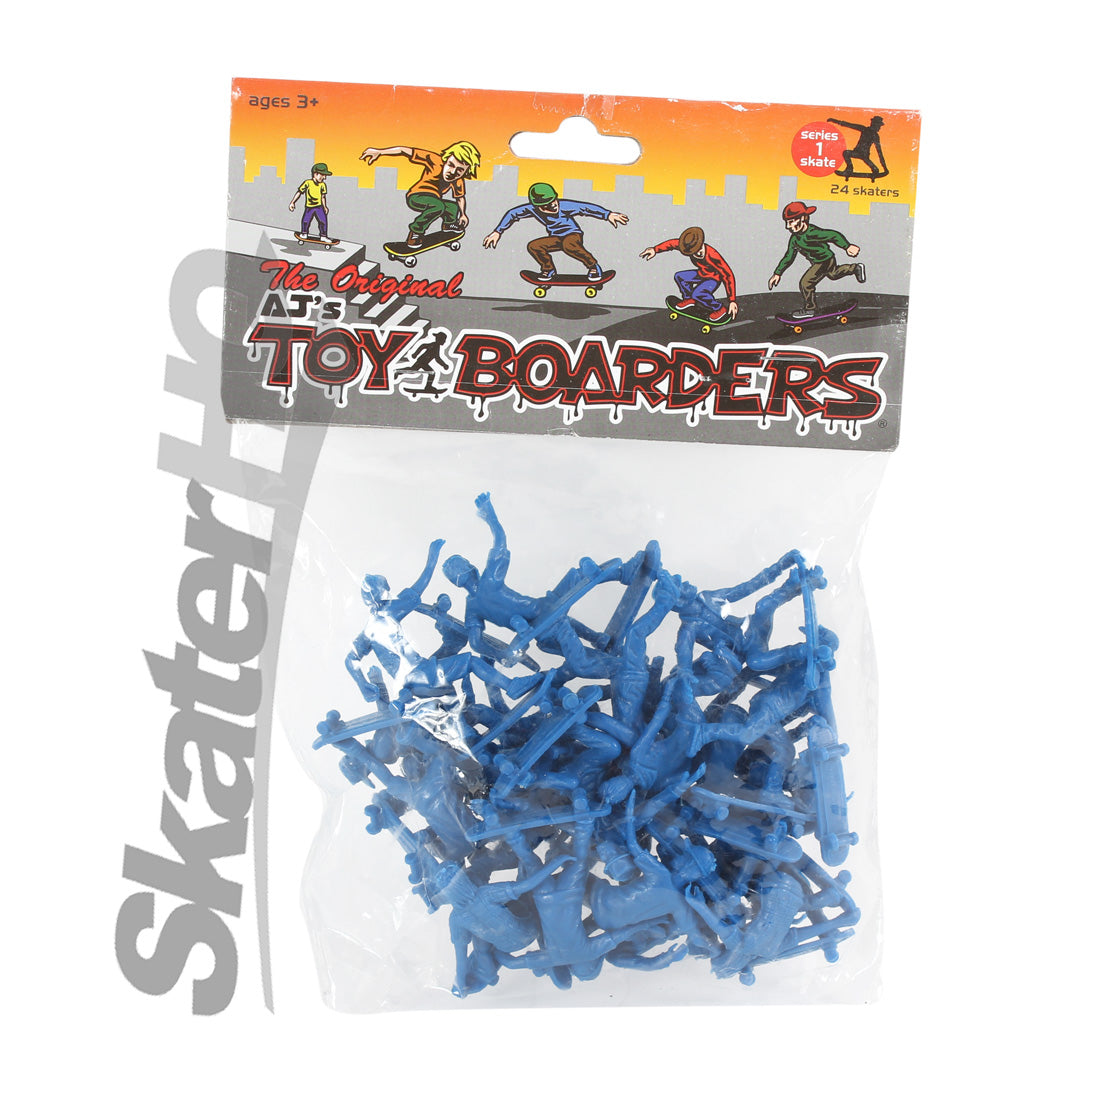 AJs Toy Boarders Skate Series 1 - Blue Skateboard Accessories